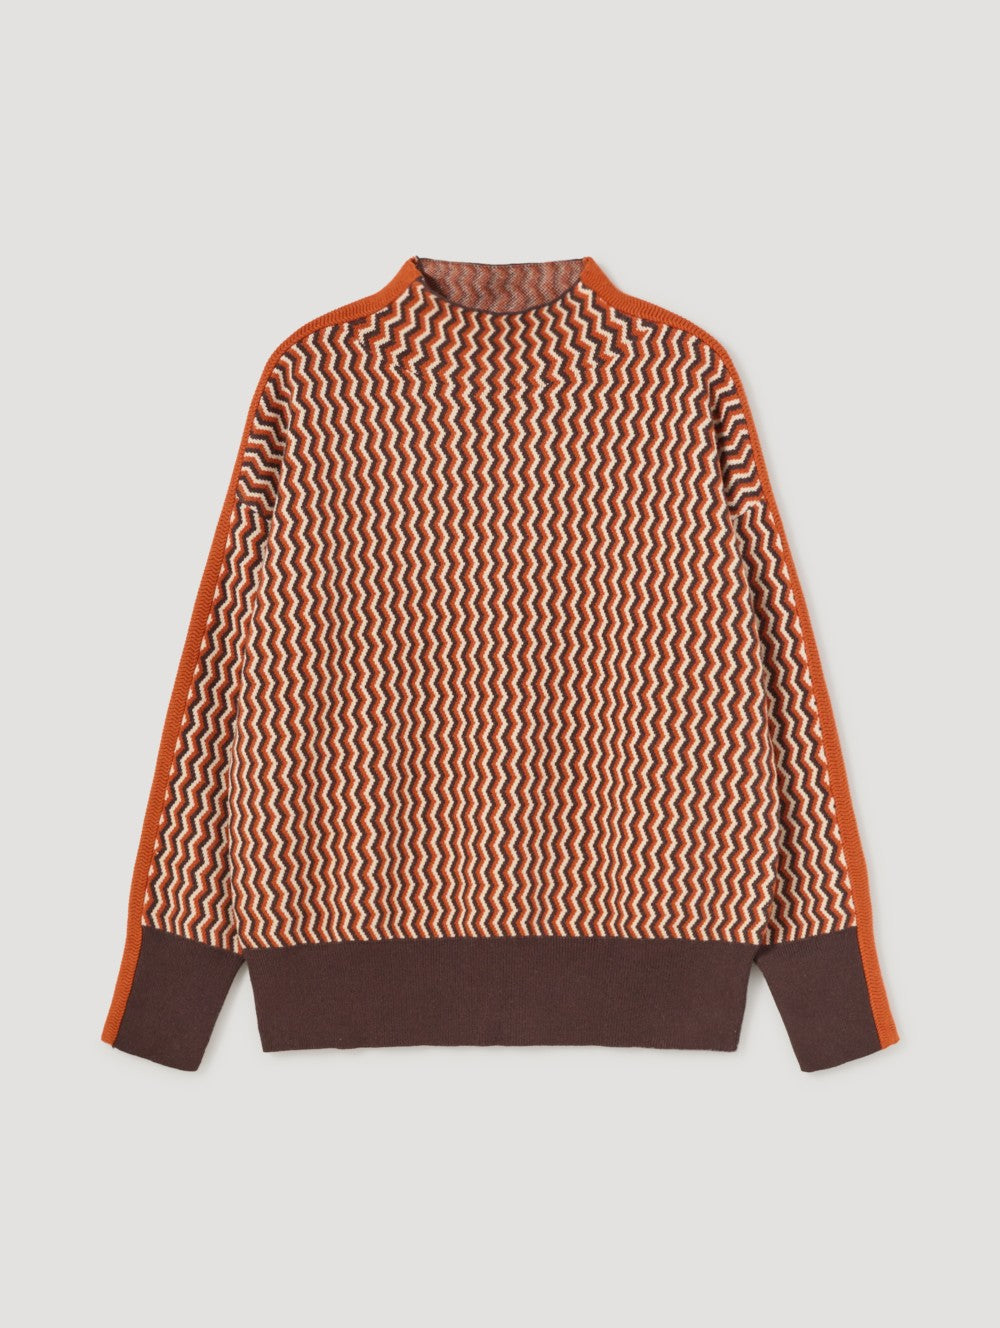 Orange jacquard sweater - Skatie